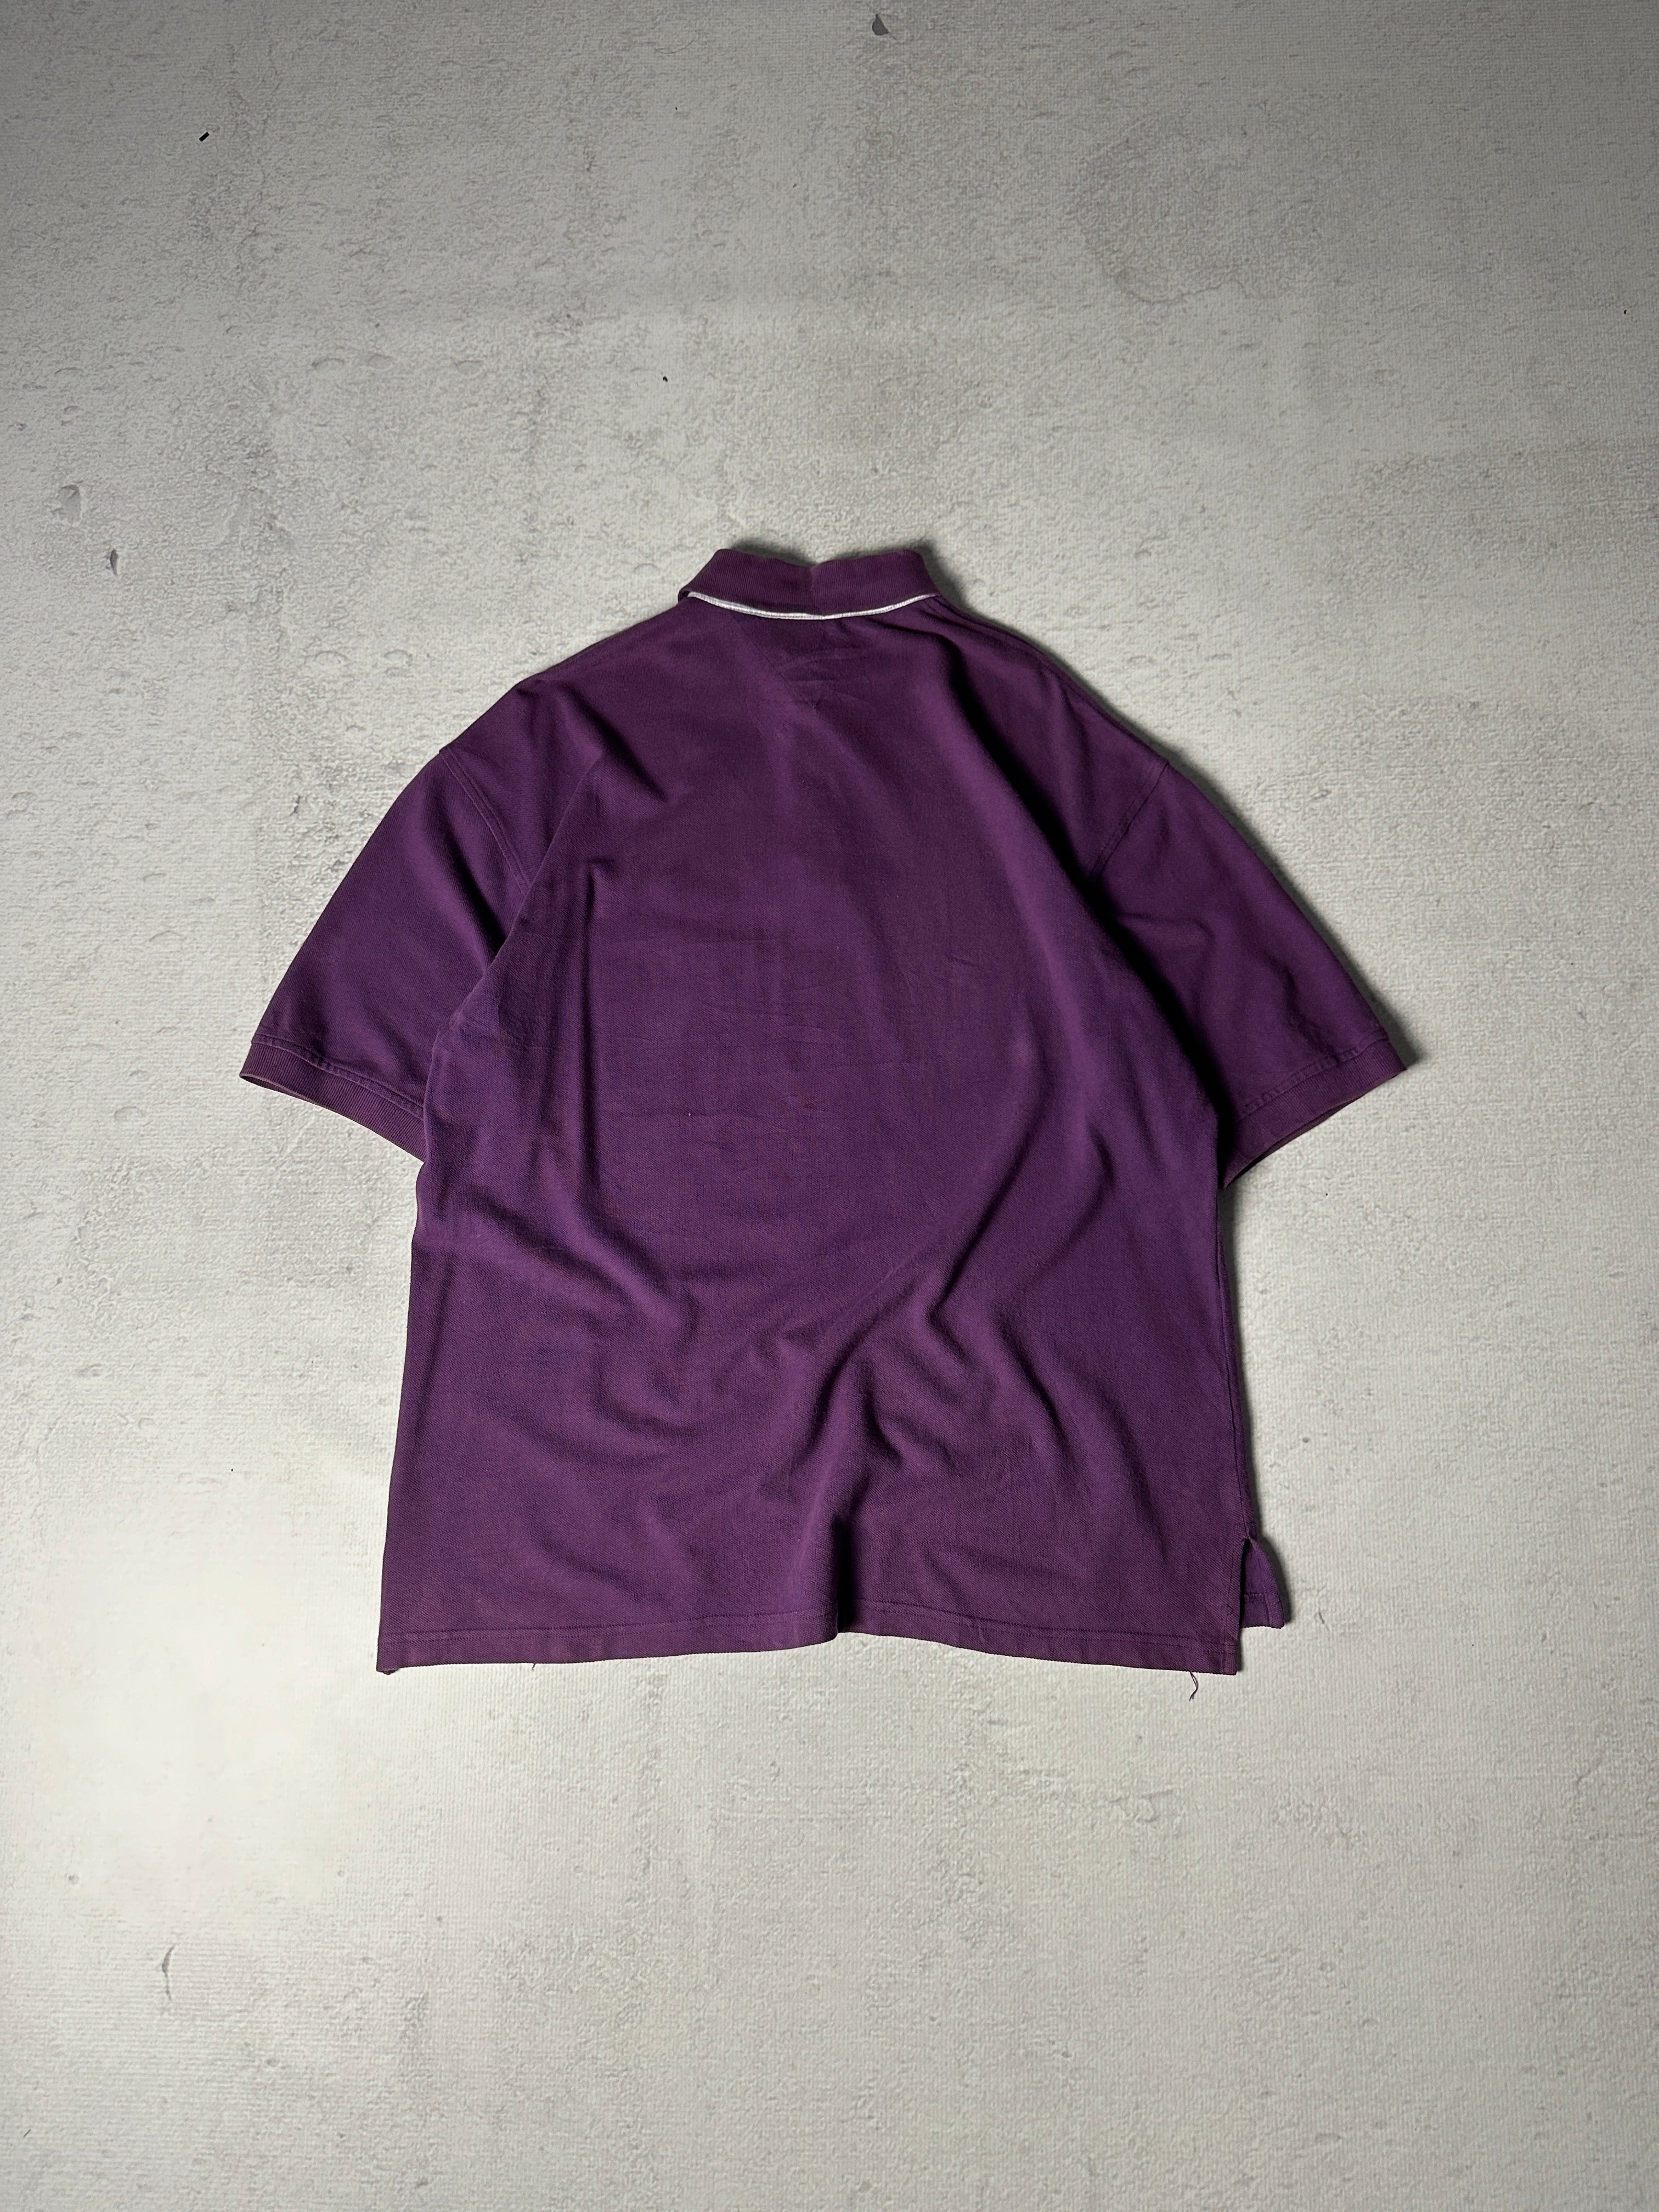 Vintage Tommy Hilfiger Polo Shirt - Men's XL